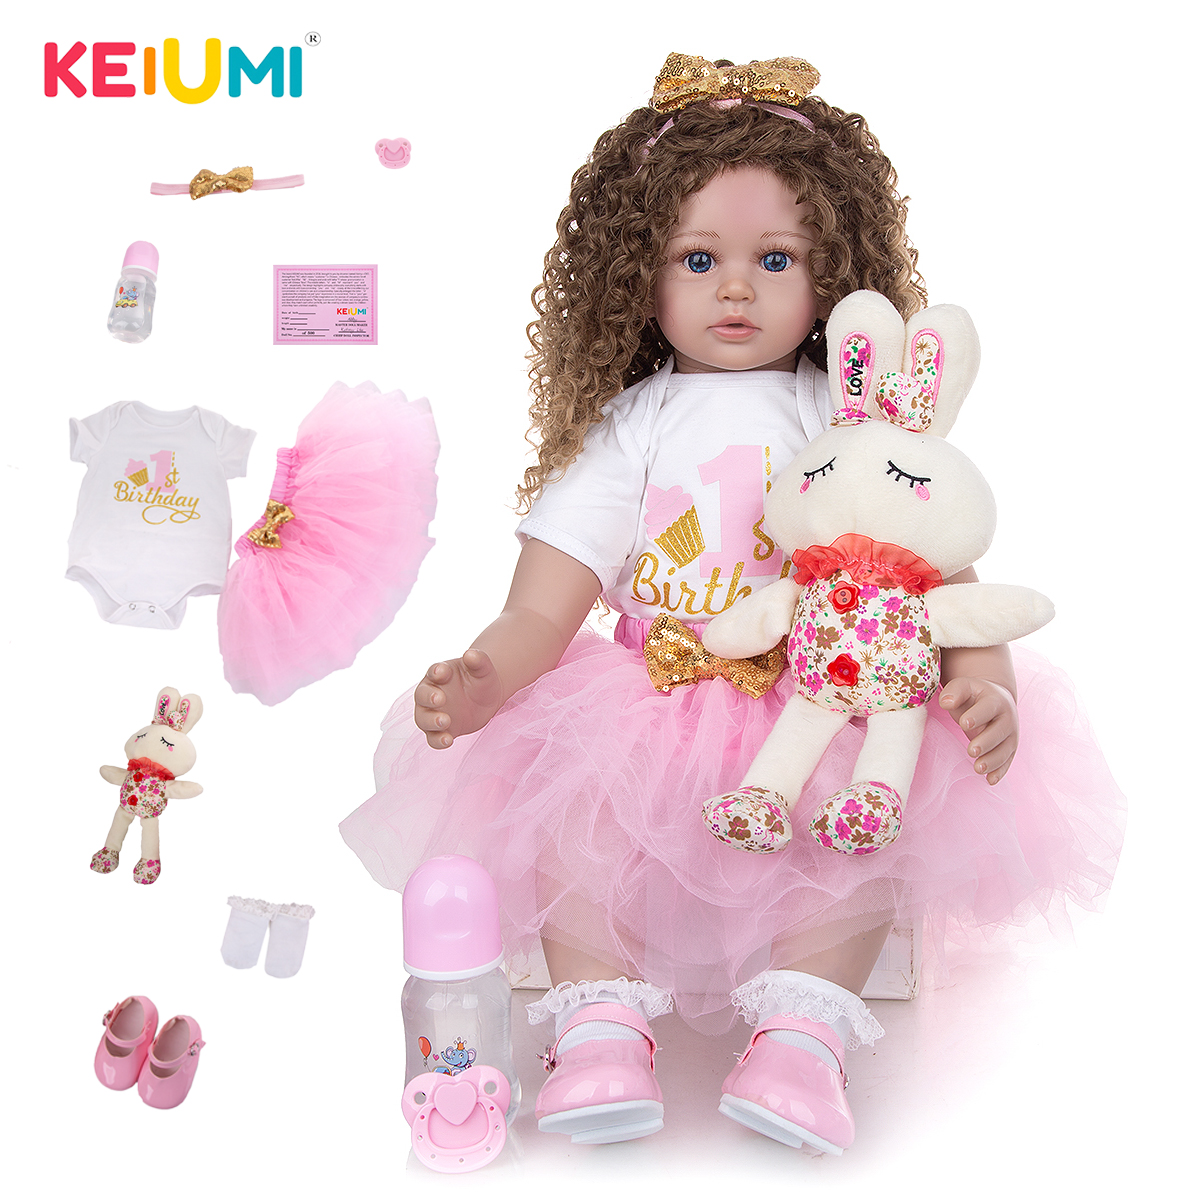 KEIUMI-아름다운 리본 베이비 인형, 24 인치, 공주 천 바디 리본돌, 여아용 장난감, 놀이 친구, DIY 장난감, 어린이 생일 선물